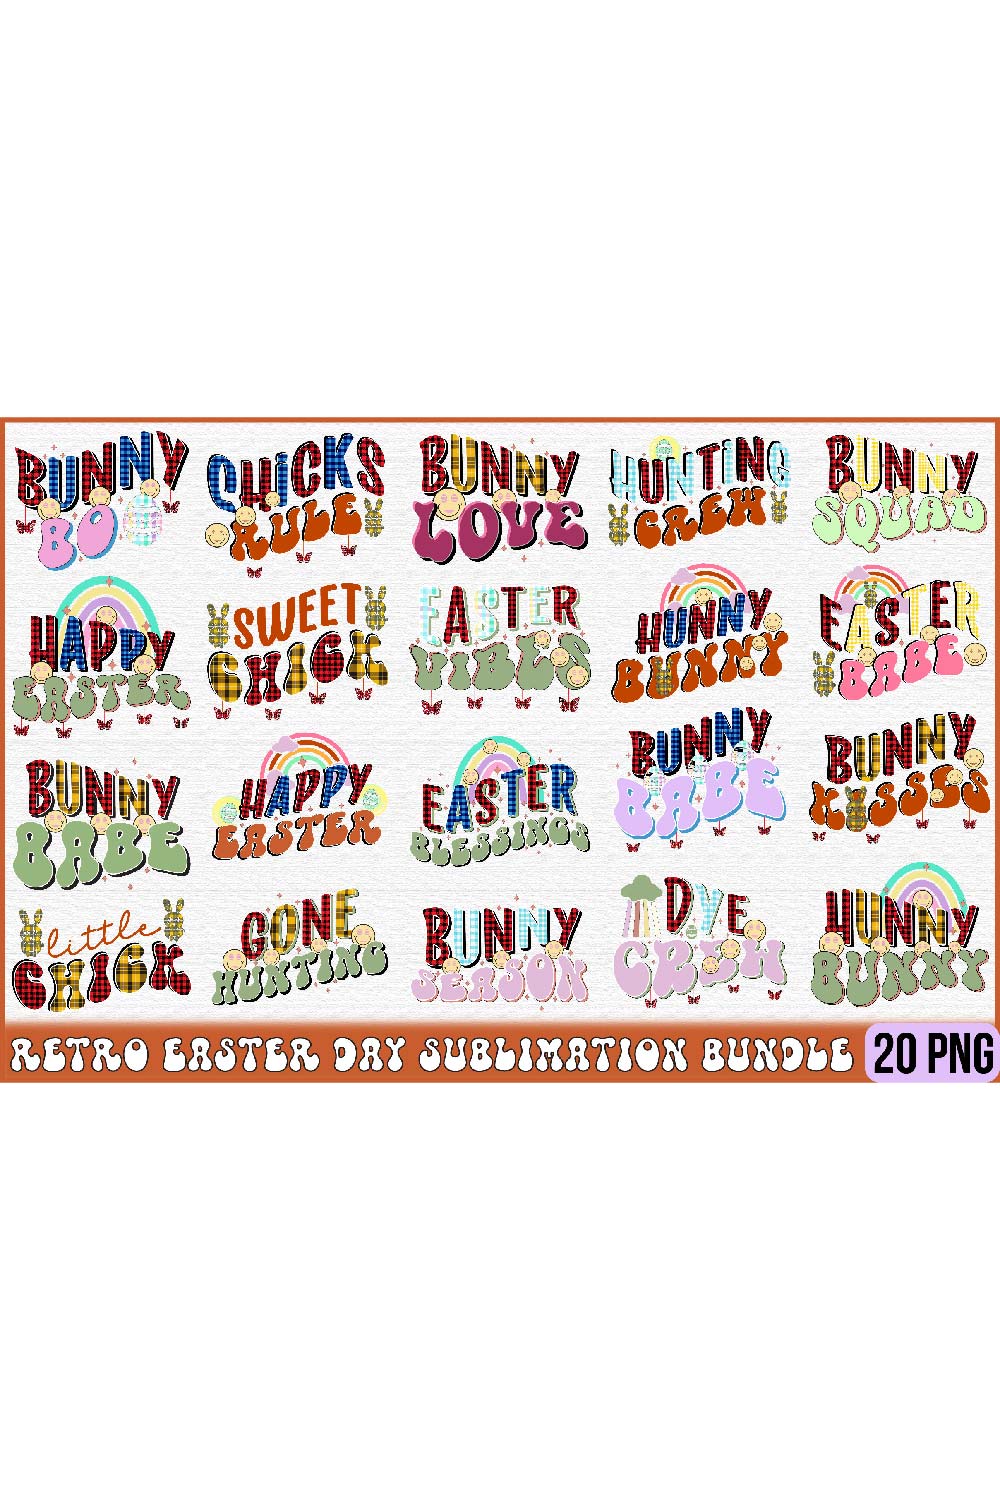 Retro Easter Day Sublimation Bundle pinterest preview image.